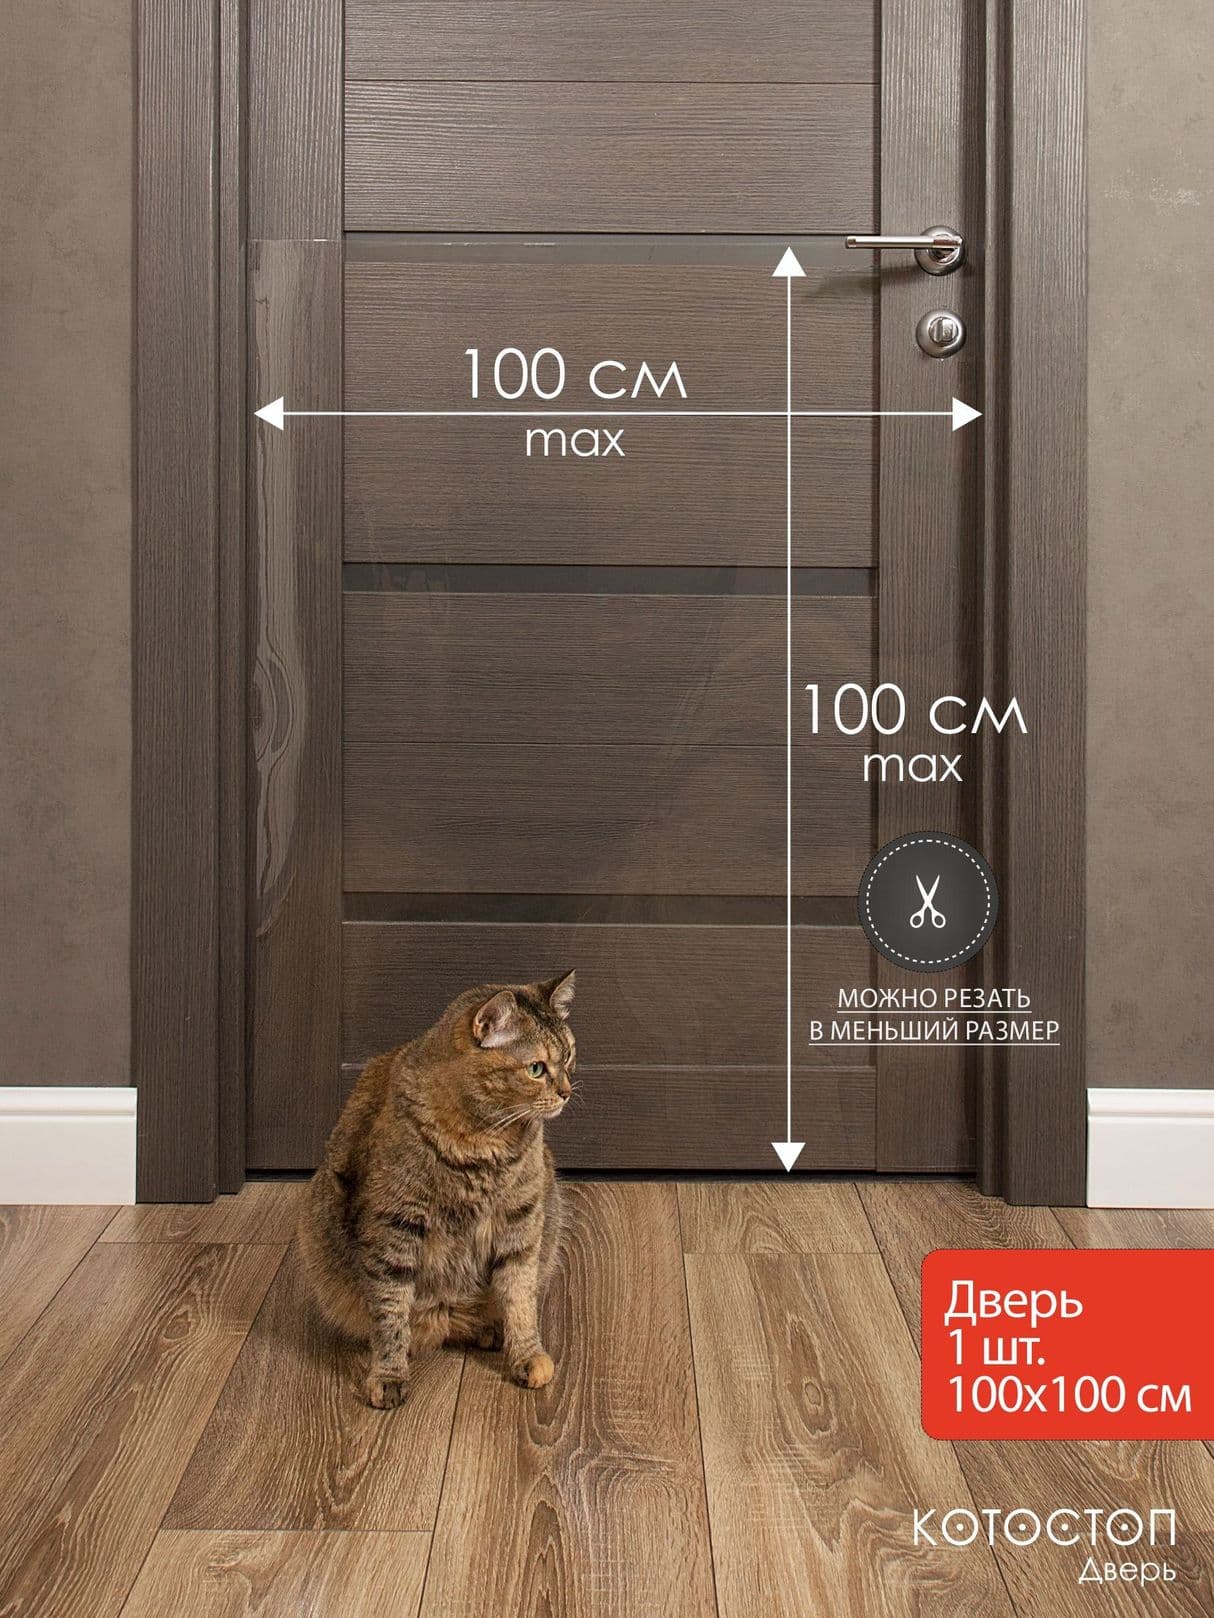 Котостоп Дверь 100х100 см